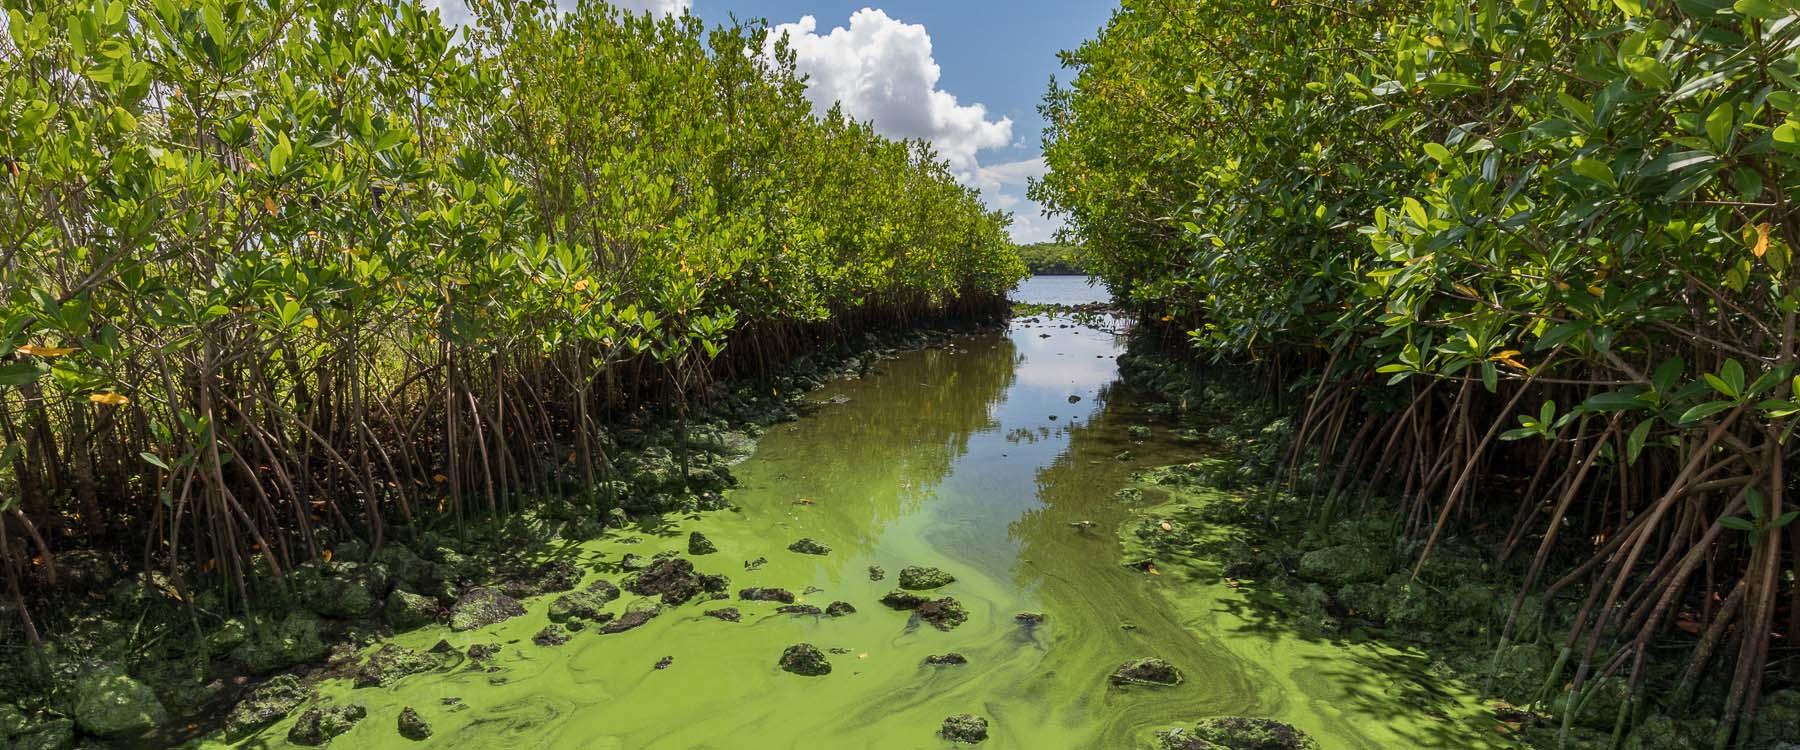 Toxic blue-green algae in Southeast Florida